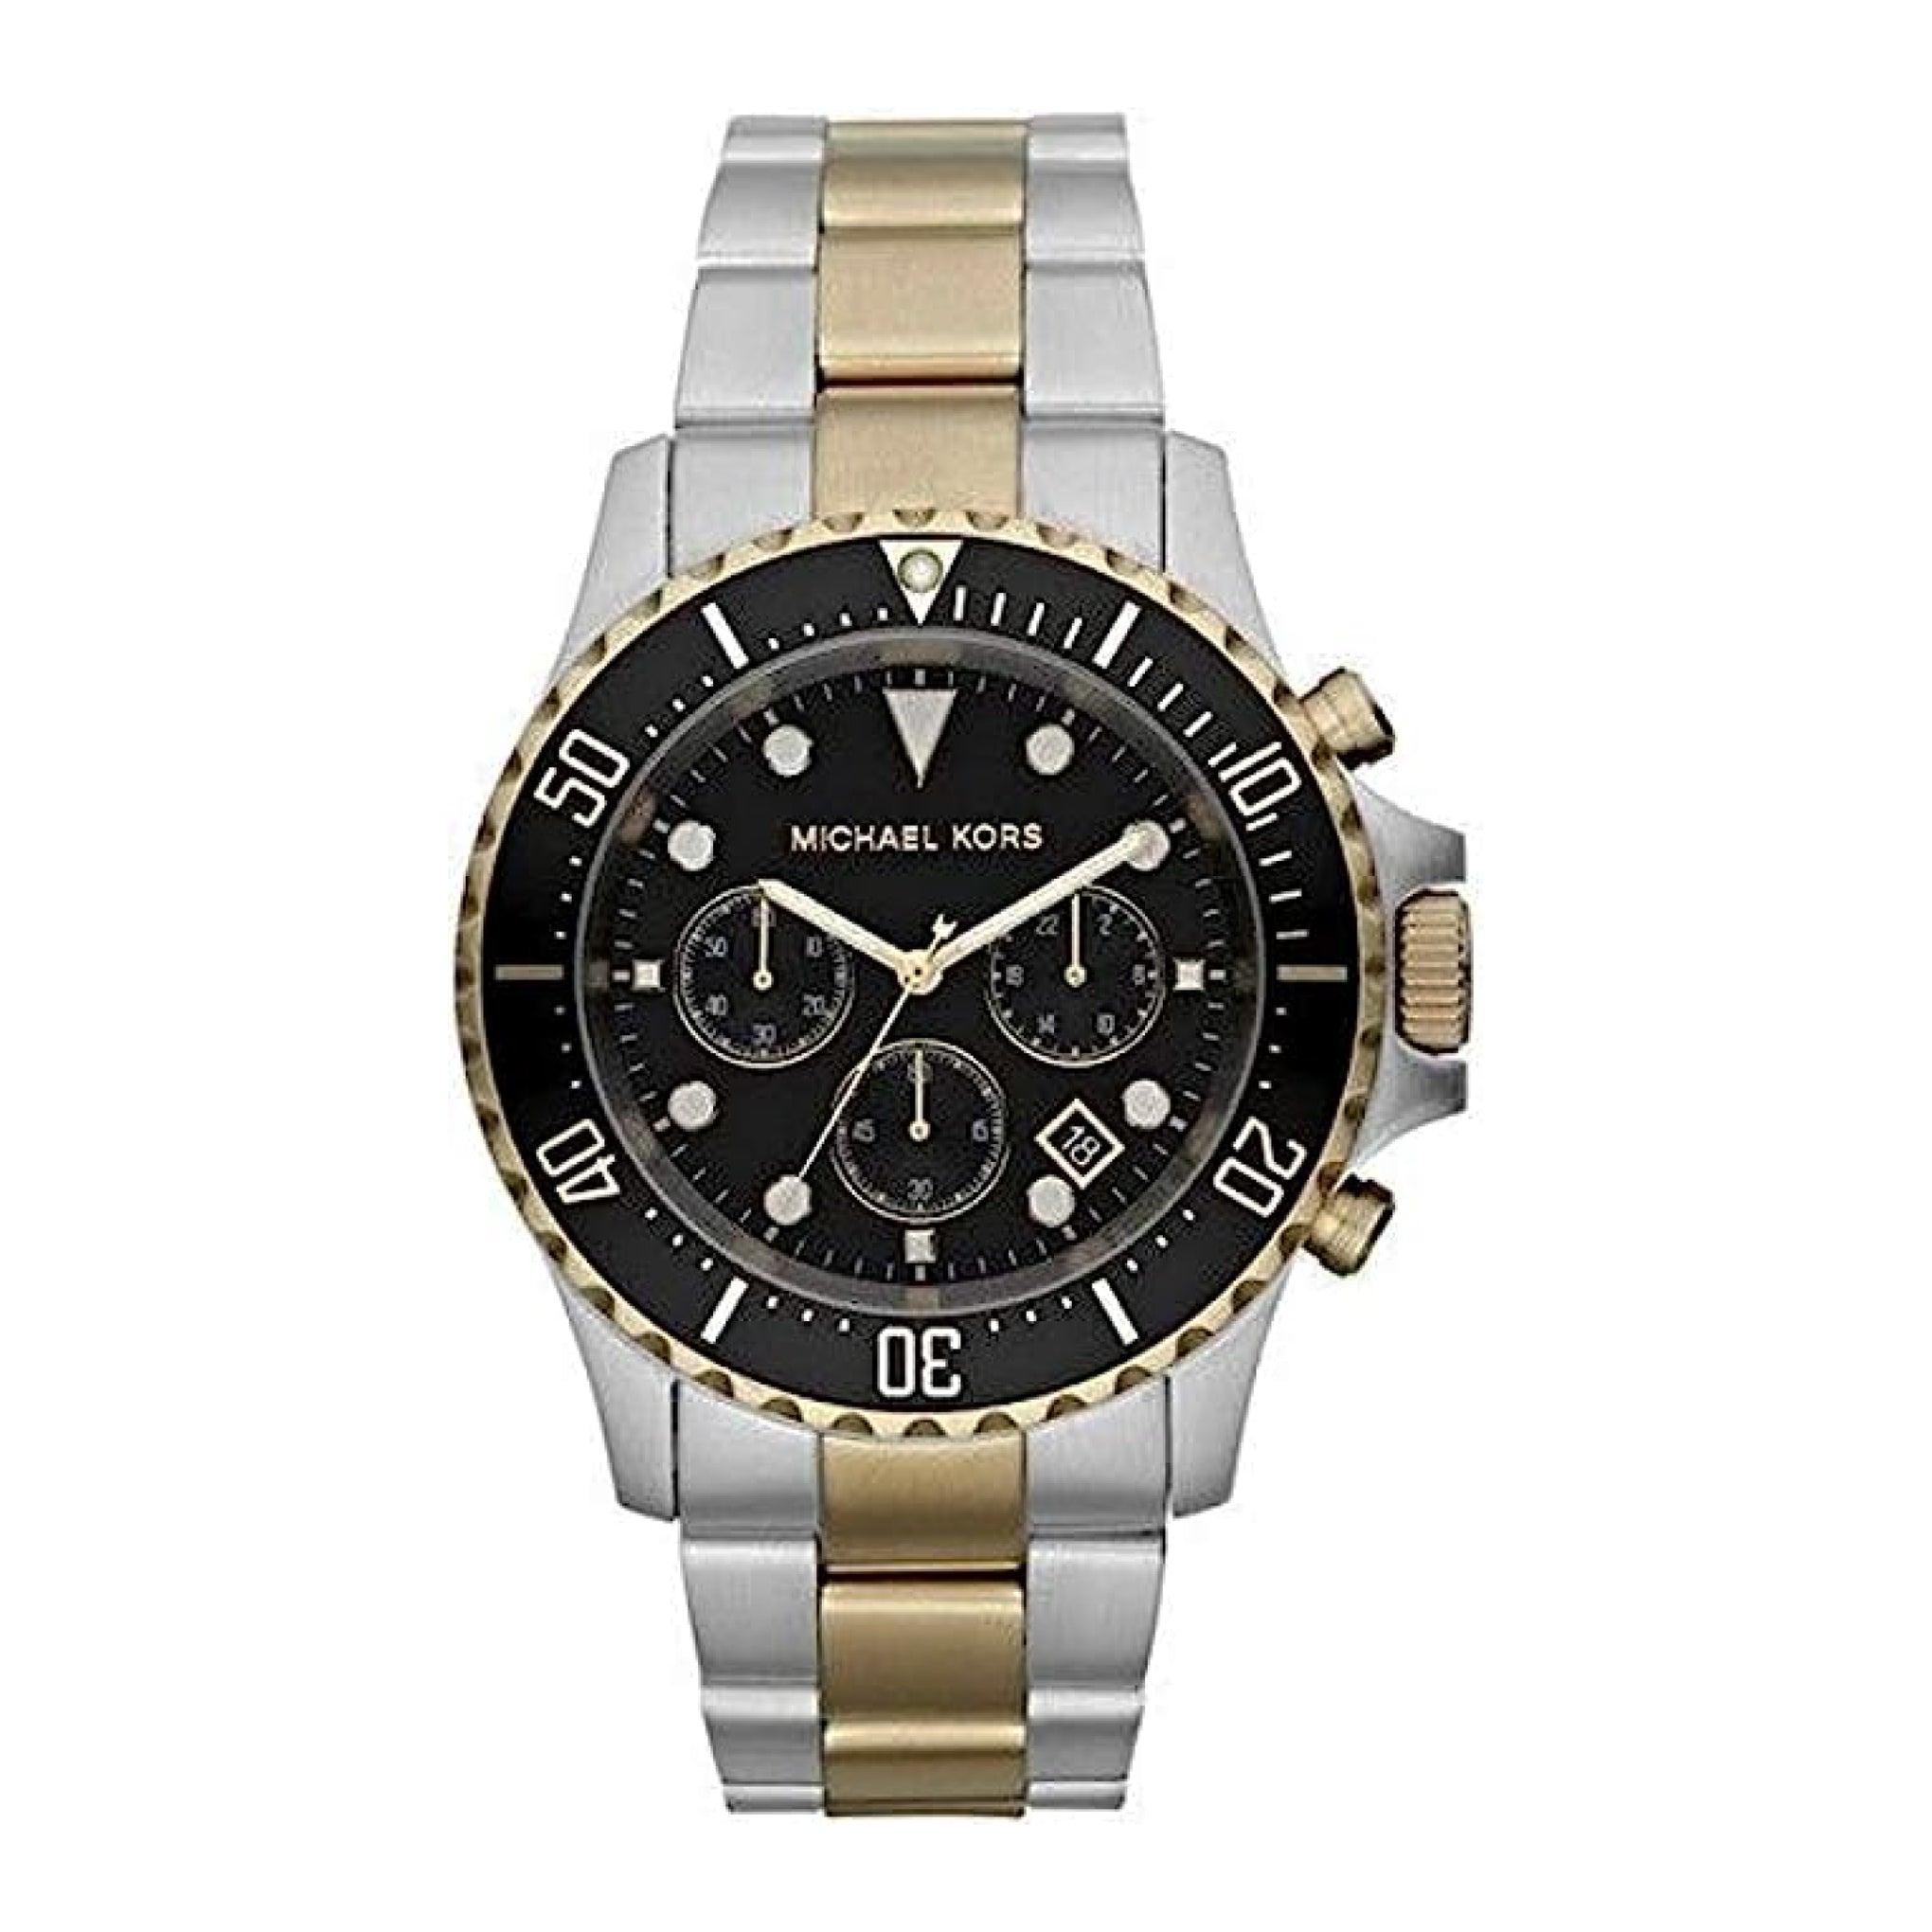 Michael Kors Men's Black Dial Stainless Steel Band Chronograph Watch Mk8311